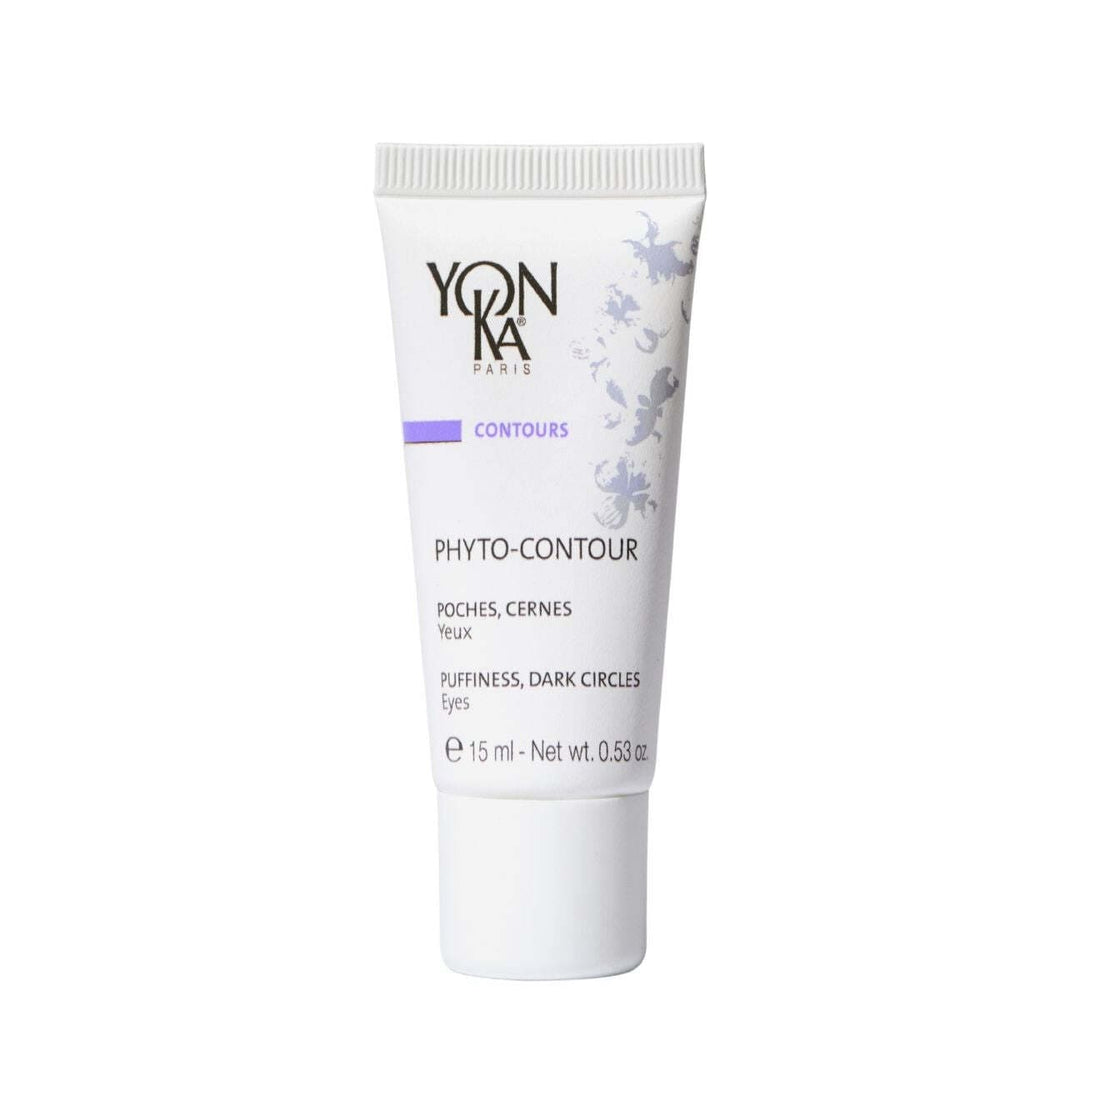 Yon-Ka Paris Phyto Contour Shop Yonka skincare at Skin Type Solutions